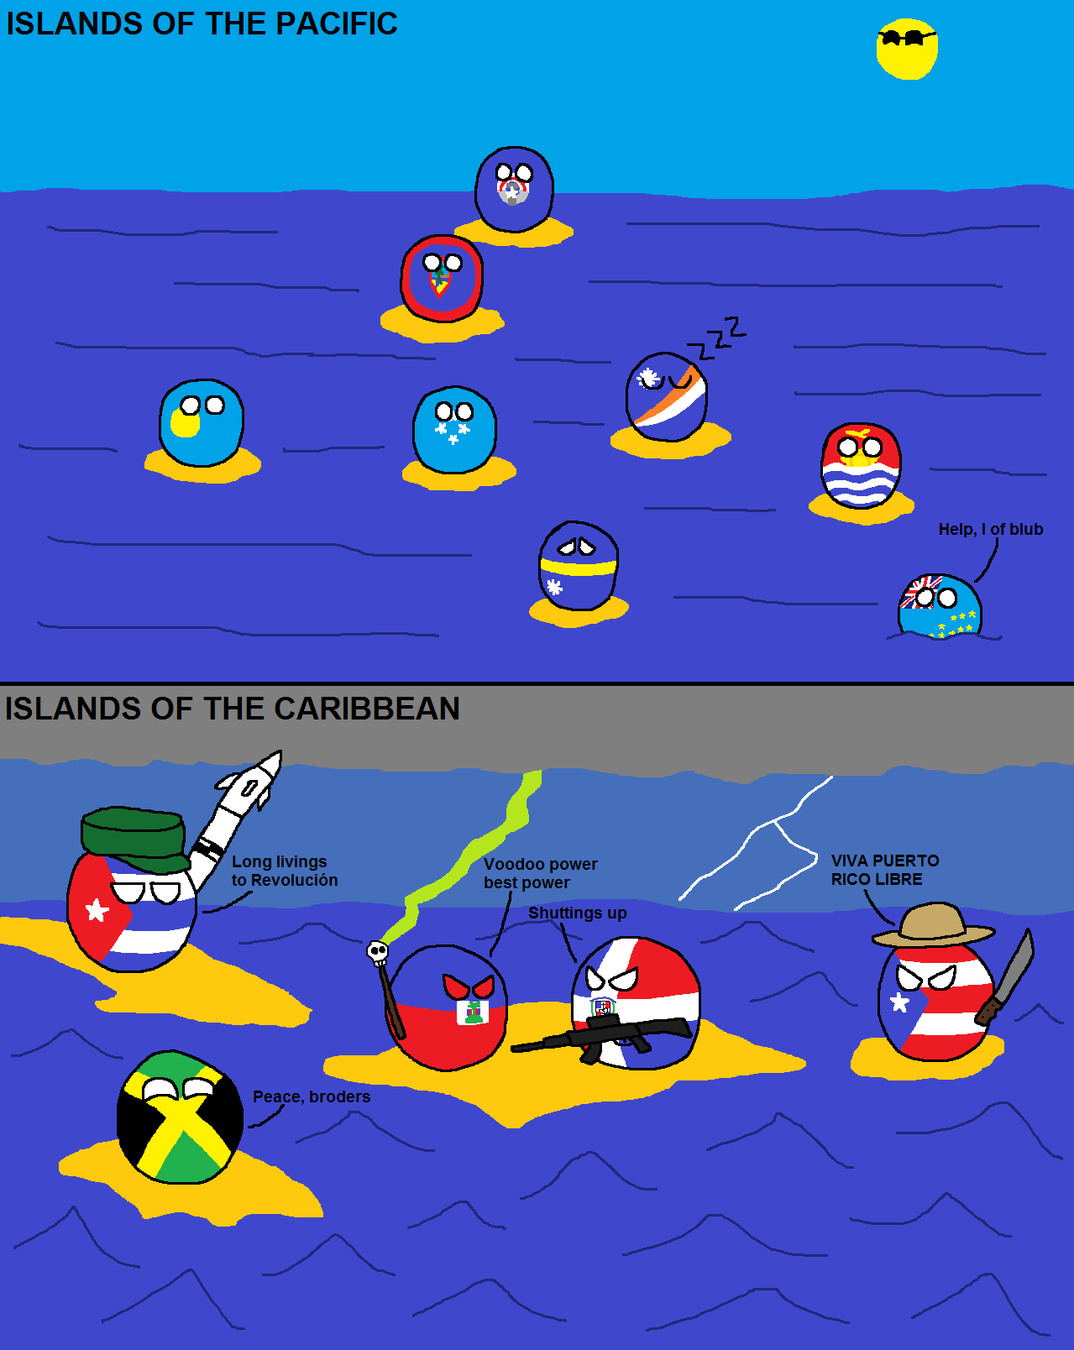 Caribean - meme